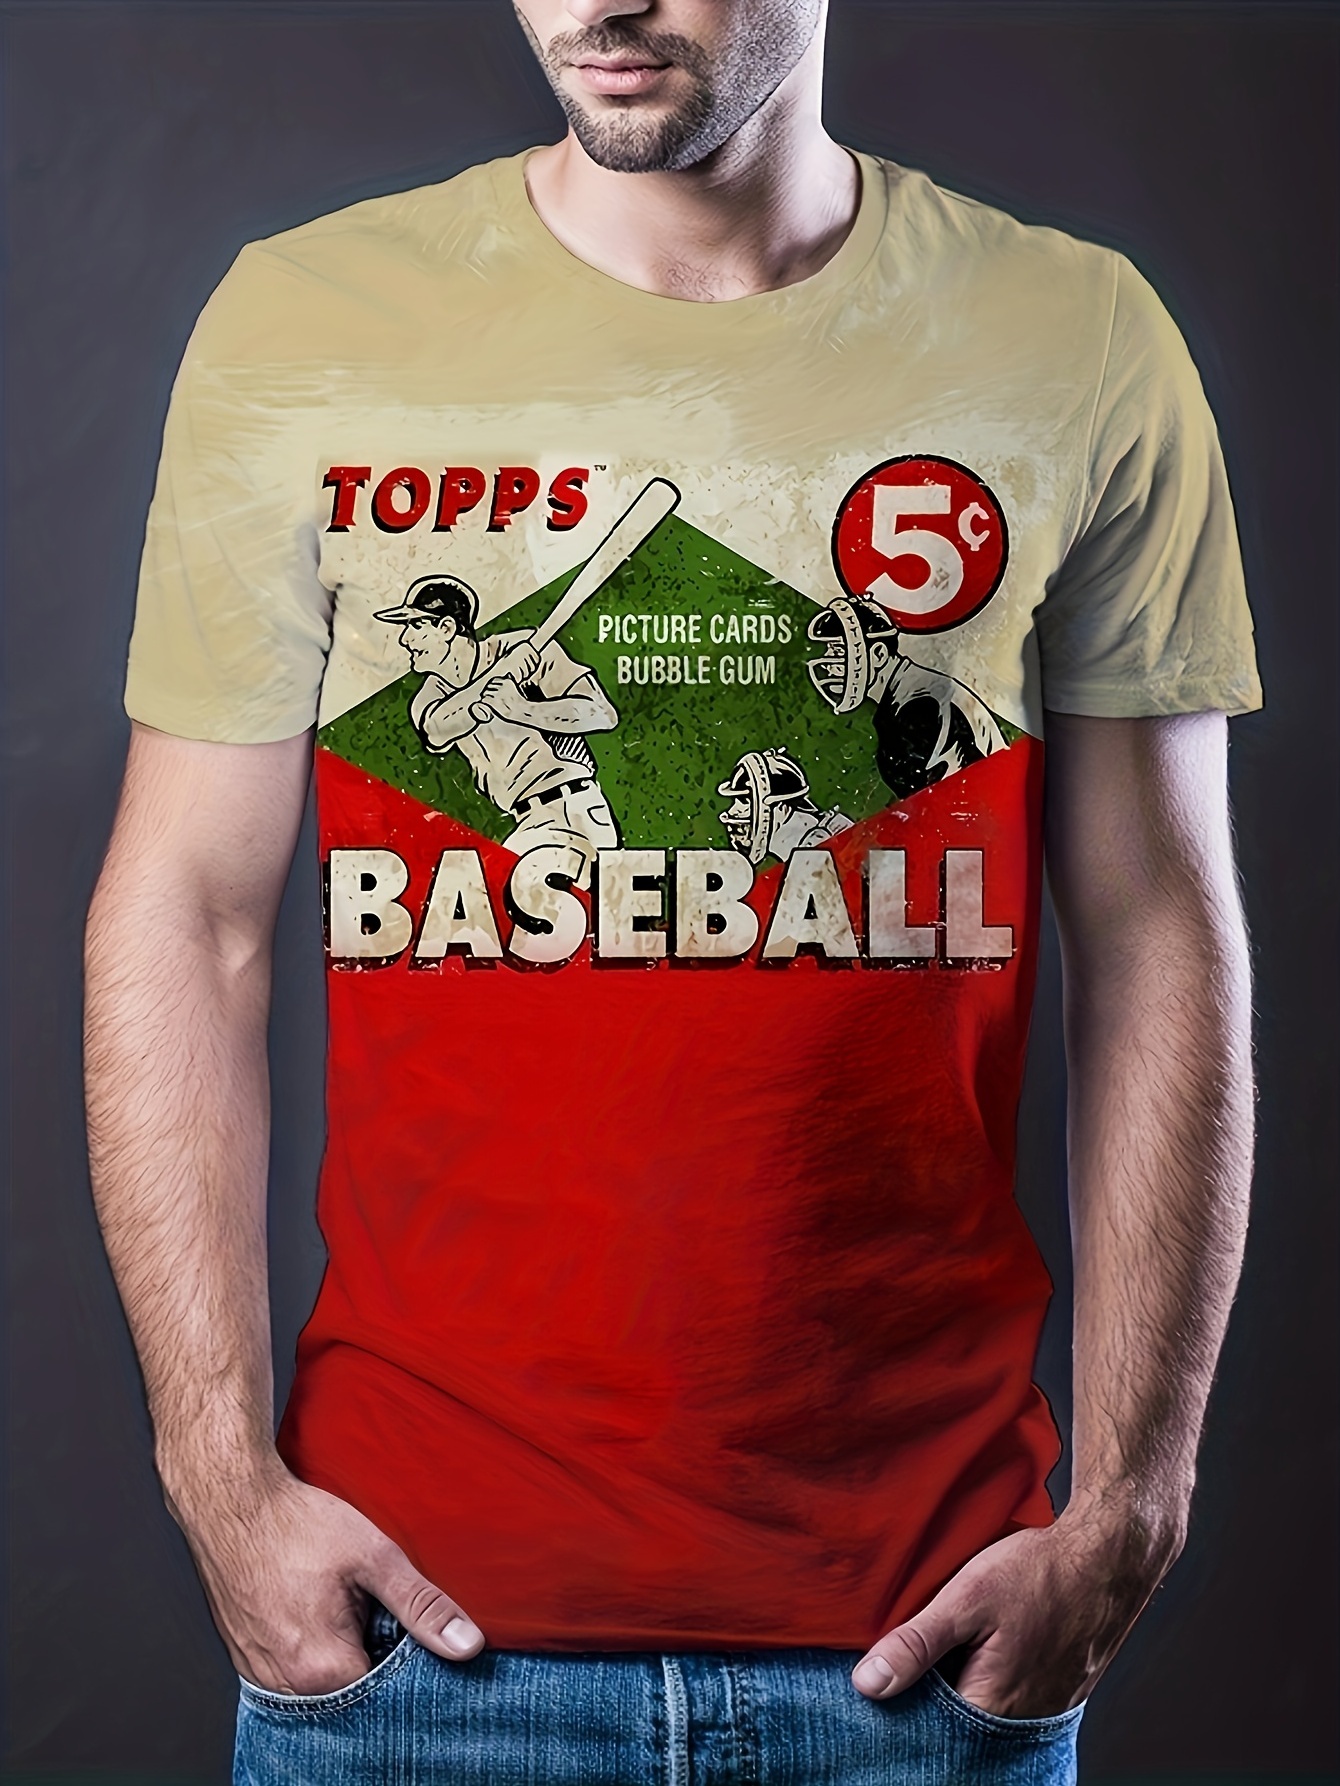 Vintage Baseball Print T-shirt For Men - Retro Graphic Design